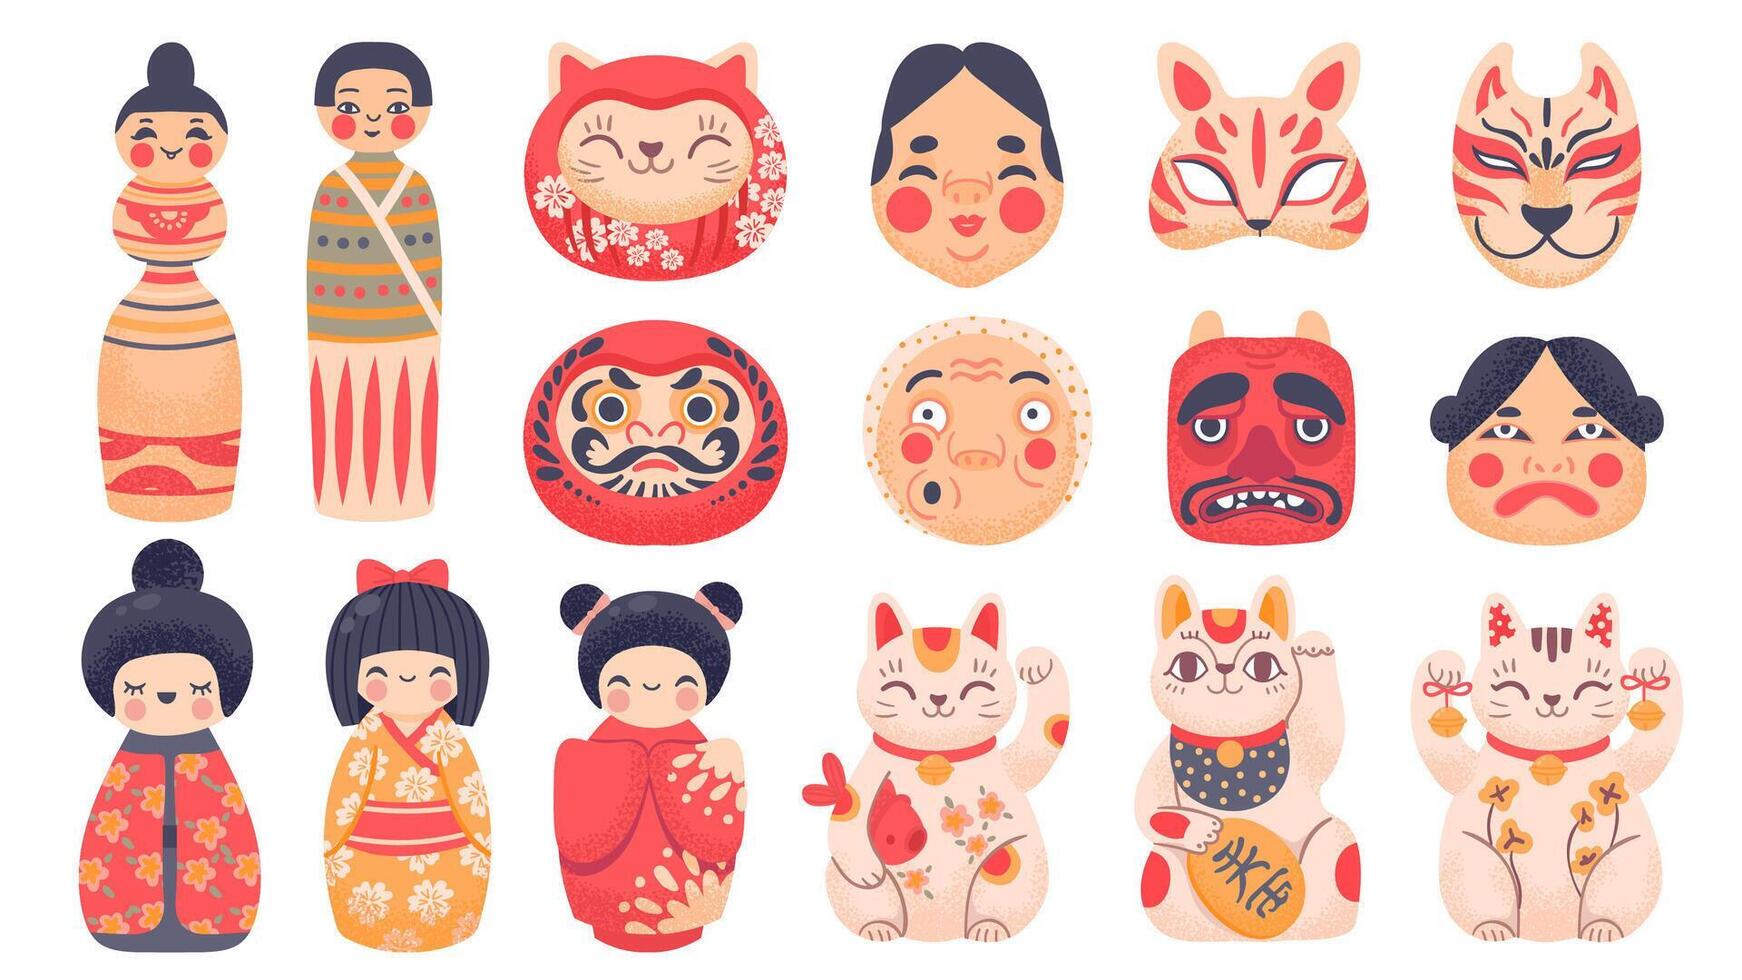 Japanese traditional toys. Daruma, kokeshi dolls, maneki neko lucky cat and mask from Japan. Cute cartoon asian culture symbols vector set